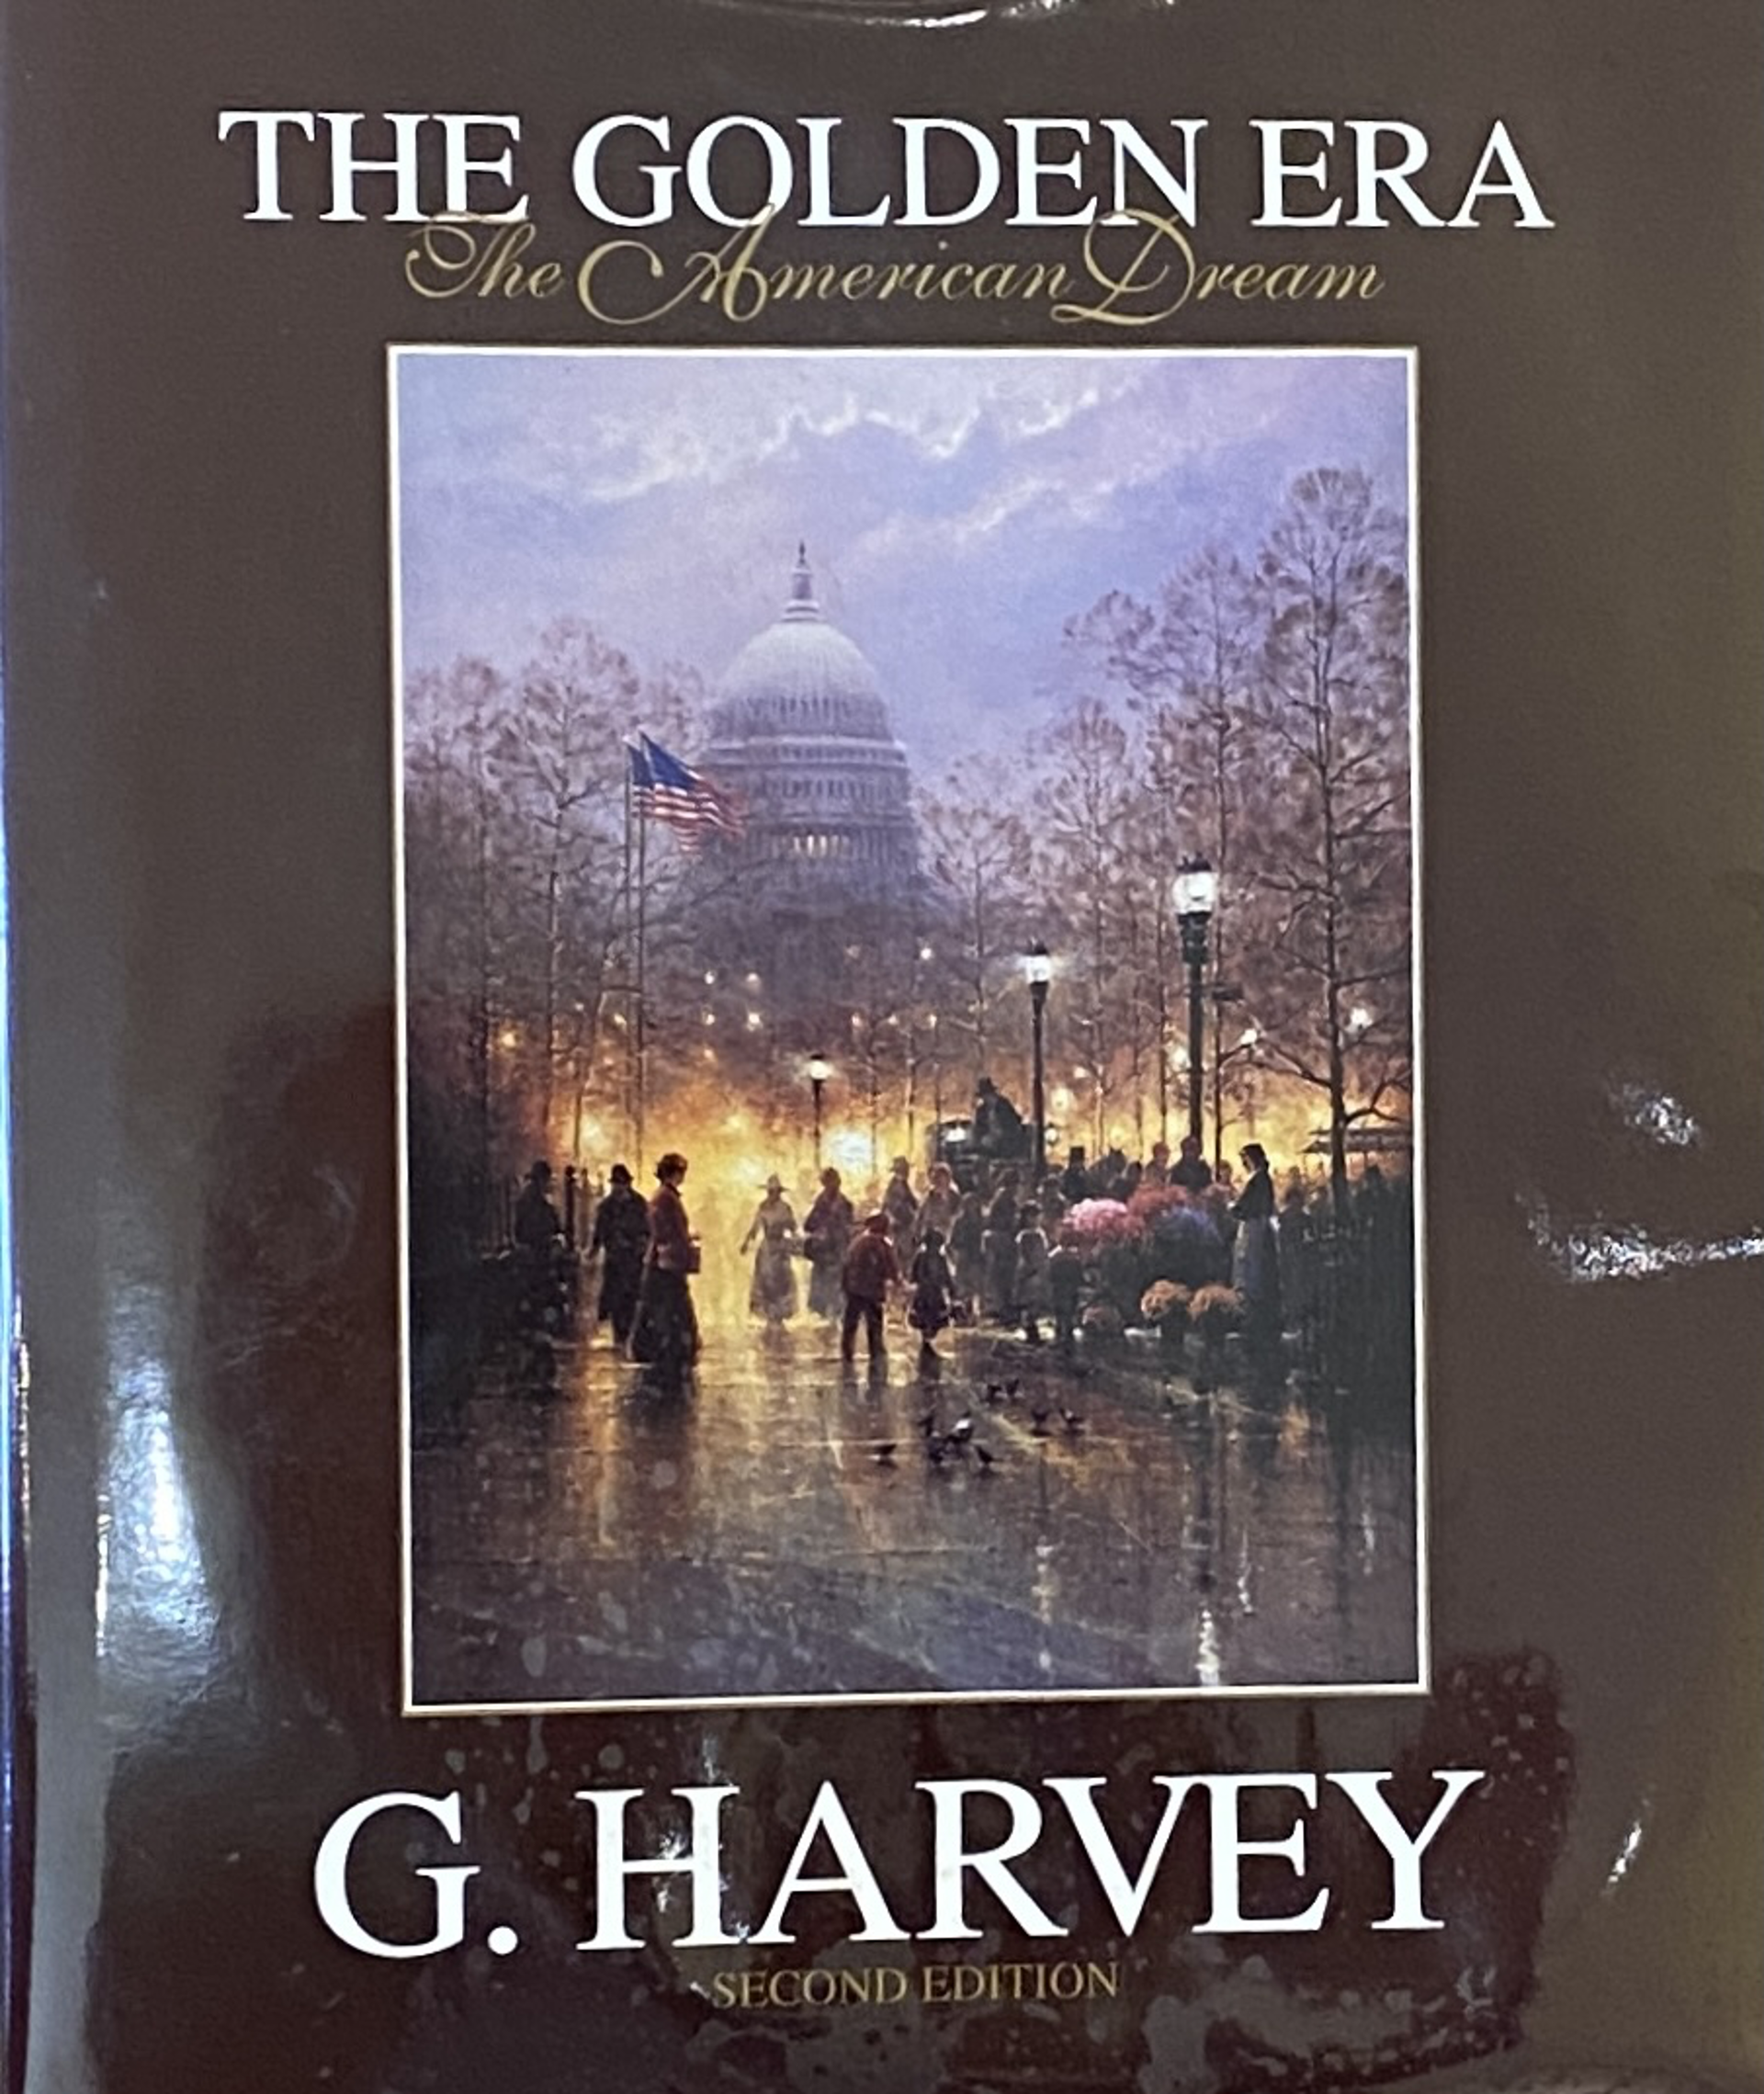 The Golden Era by G. Harvey